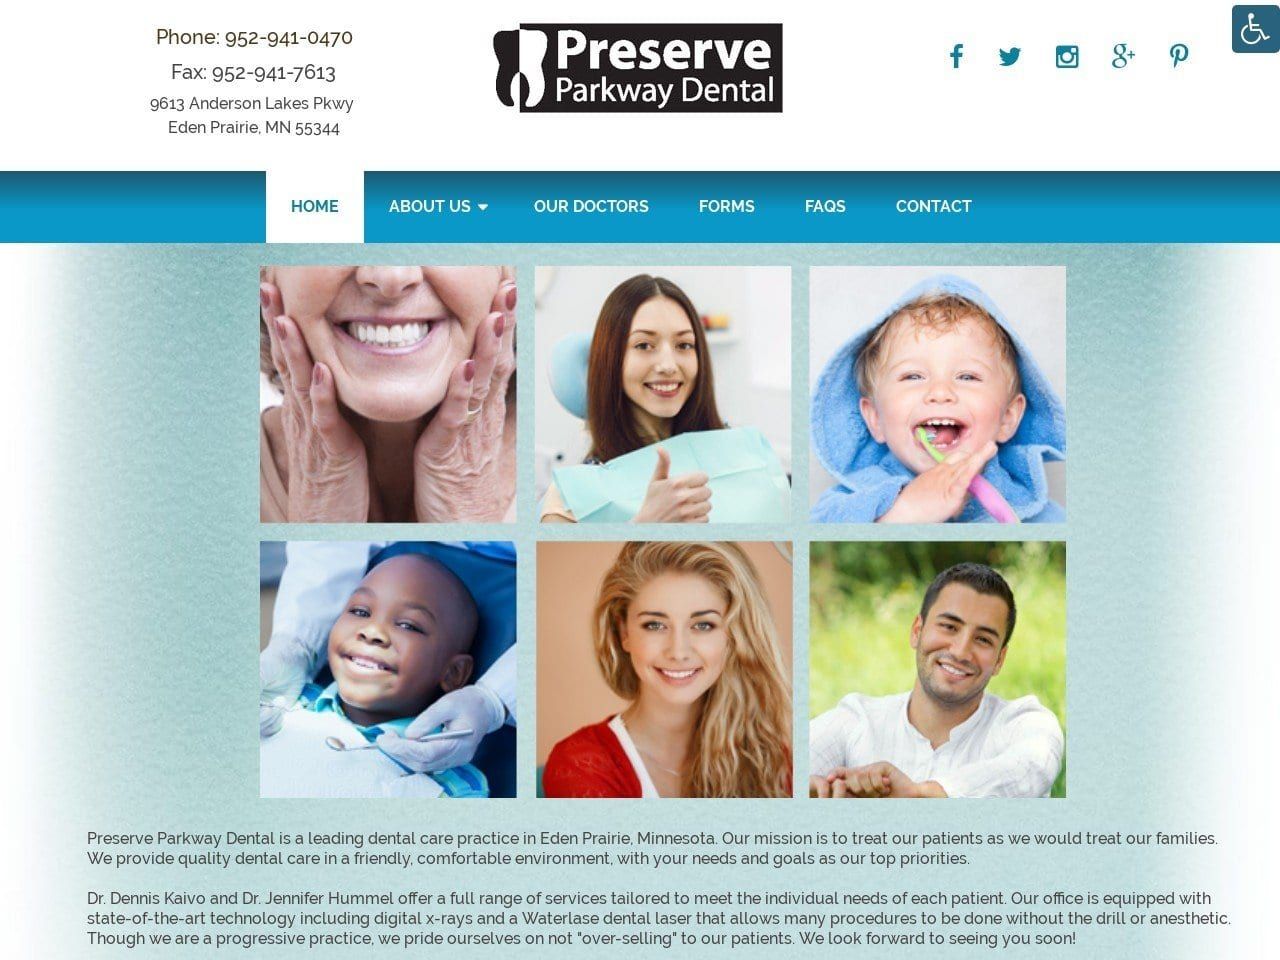 Parkway Dental Website Screenshot from preserveparkwaydental.com